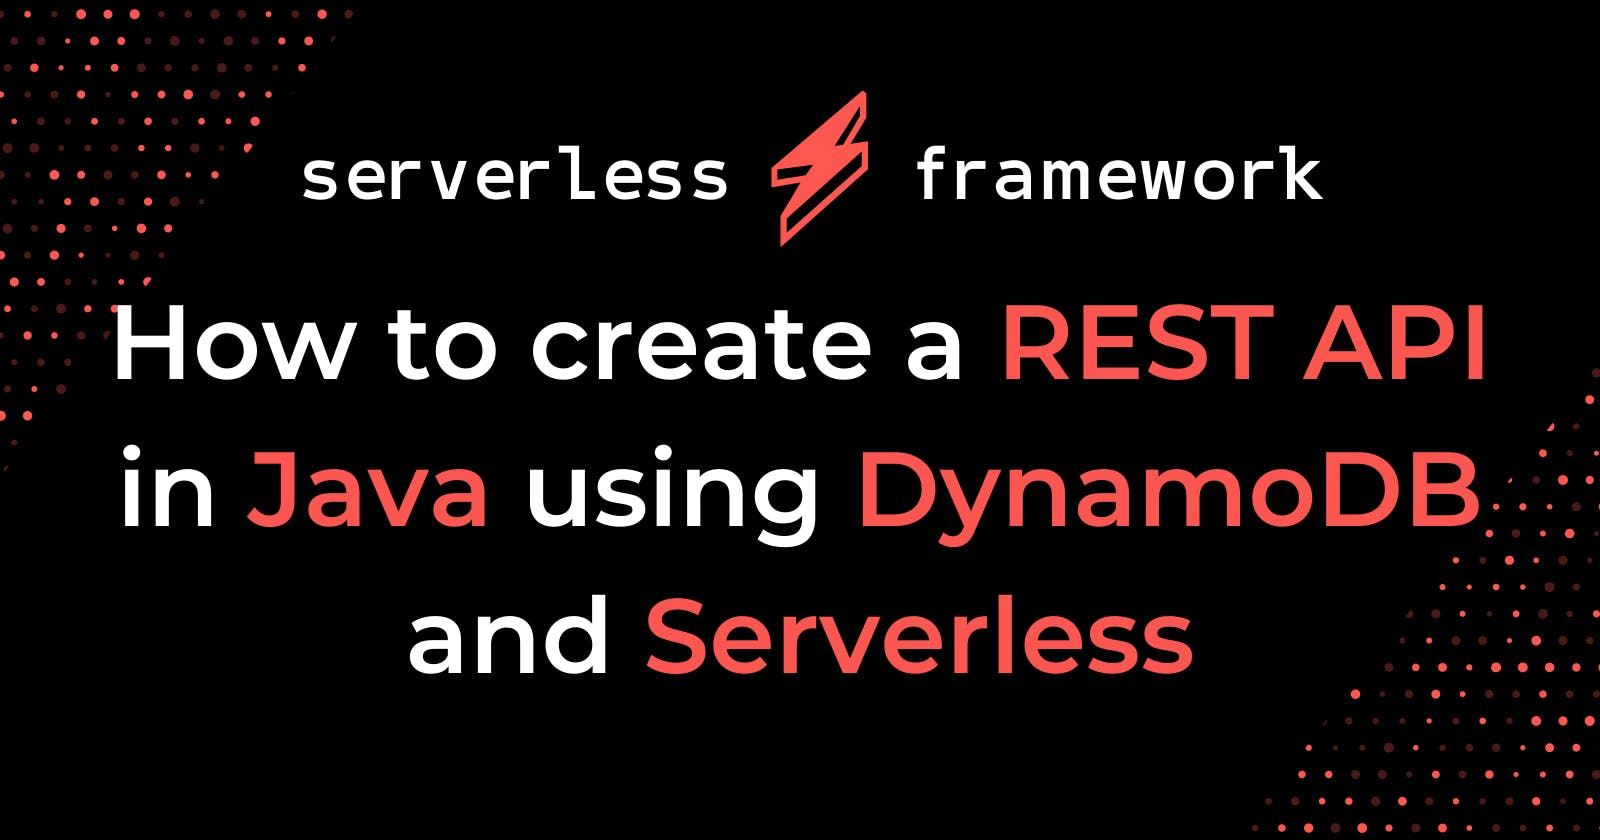 How to create a REST API in Java using DynamoDB and Serverless